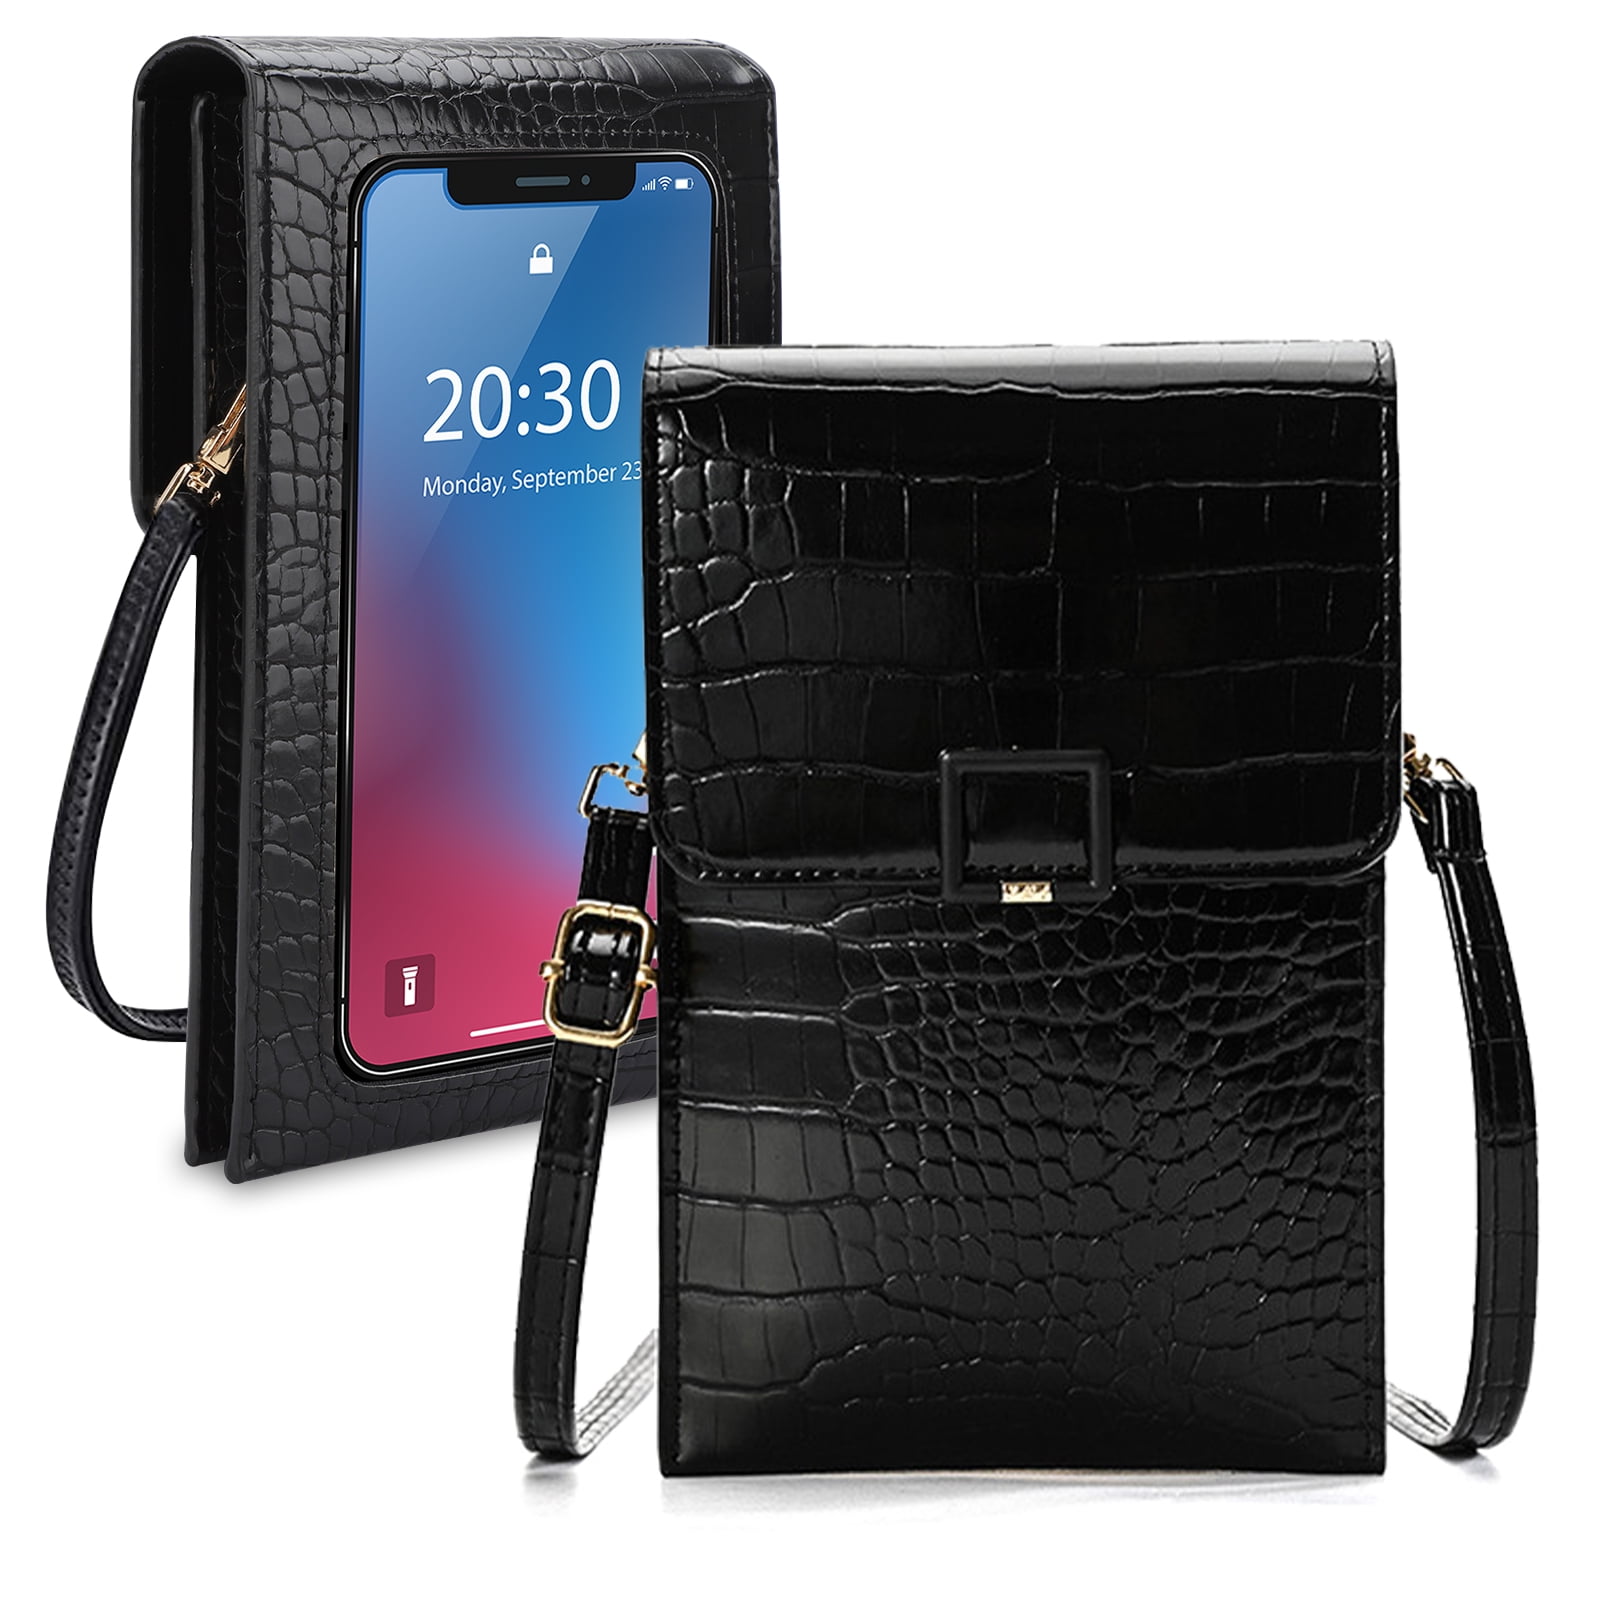 Fashion Phone Shoulder Bag Women PU Leather Messenger Bag Case For iPhone  Samsung Ladies Design Card Holder Mini Handbags Female